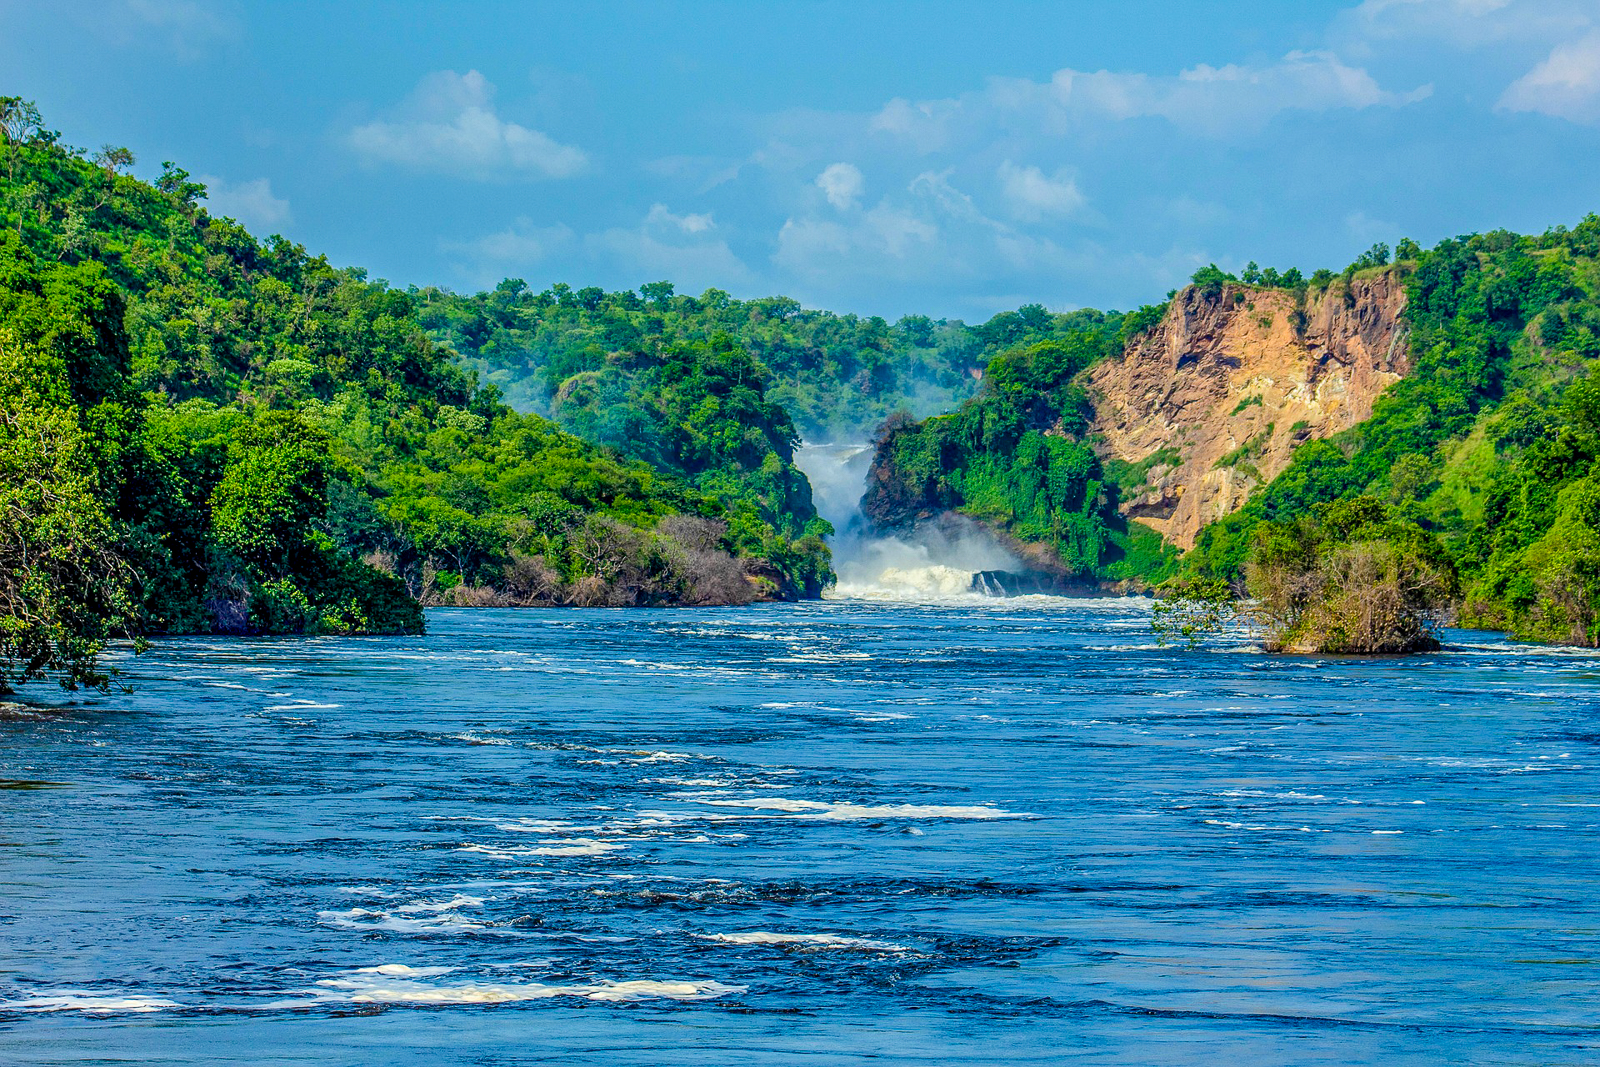 The Murchison Falls in Uganda